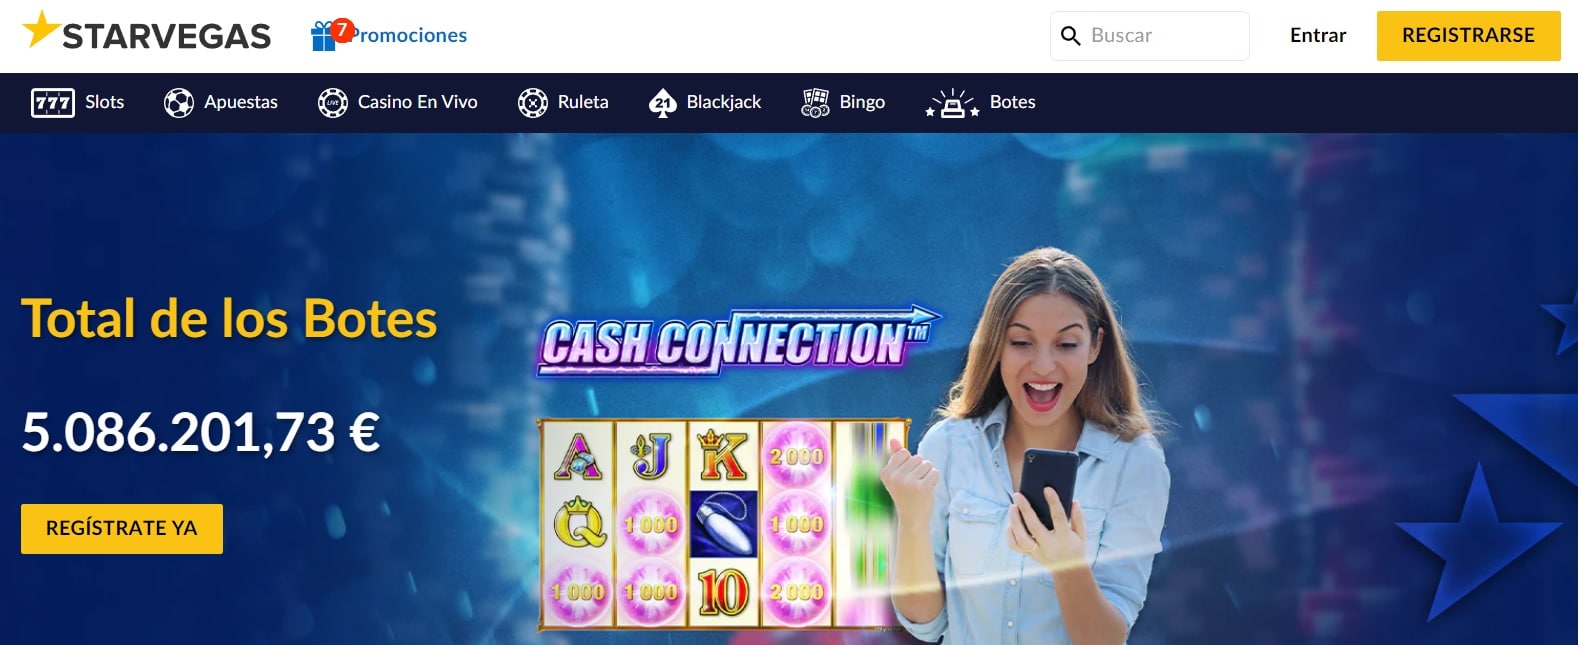 casino online espana starvegas